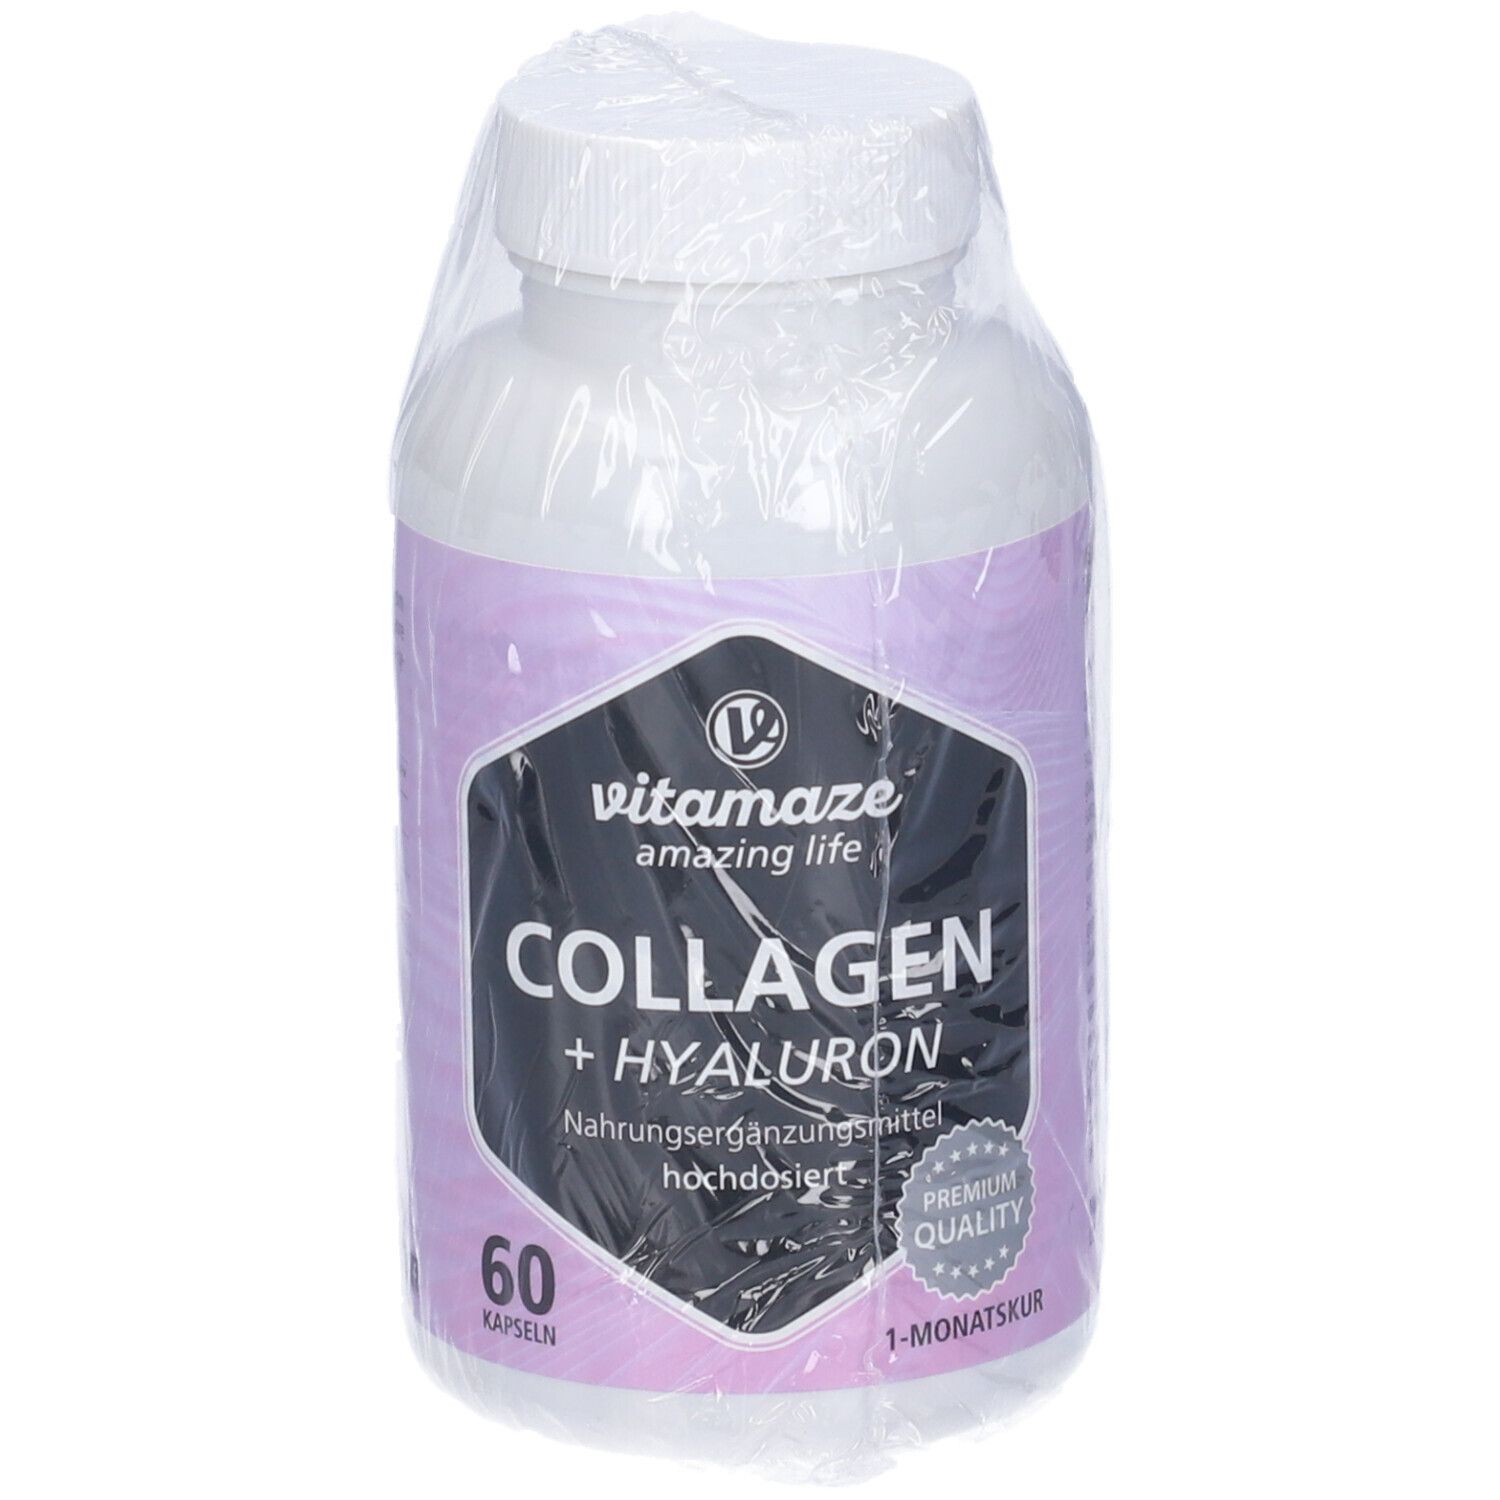 Image of Vitamaze Collagen + Hyaluron Capsule